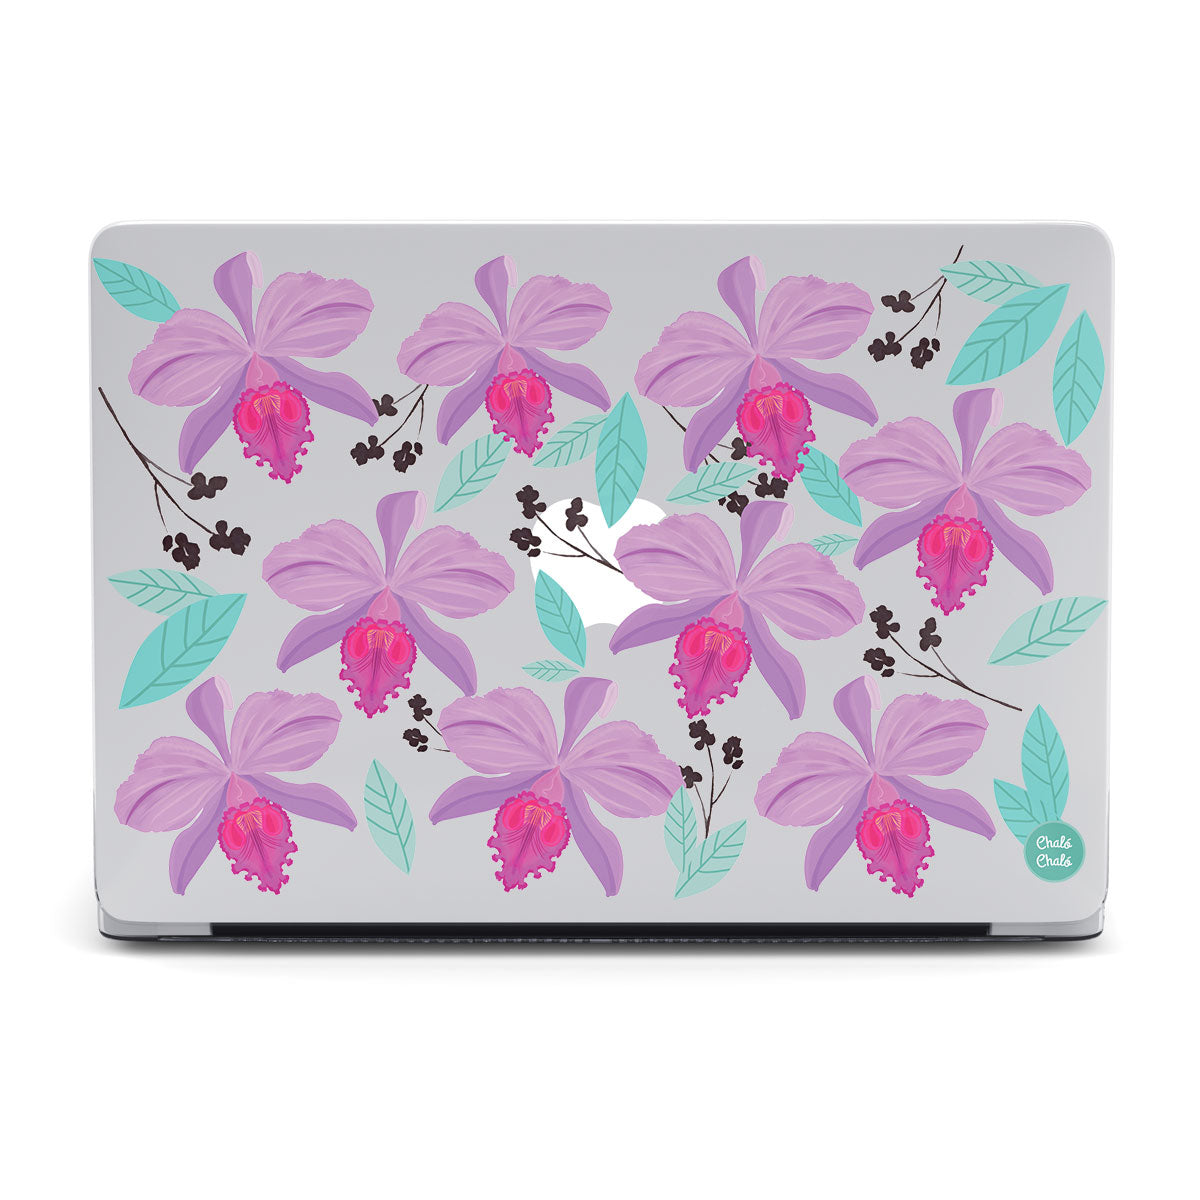 Hard Case para Macbook - Orquídeas - Chaló Chaló